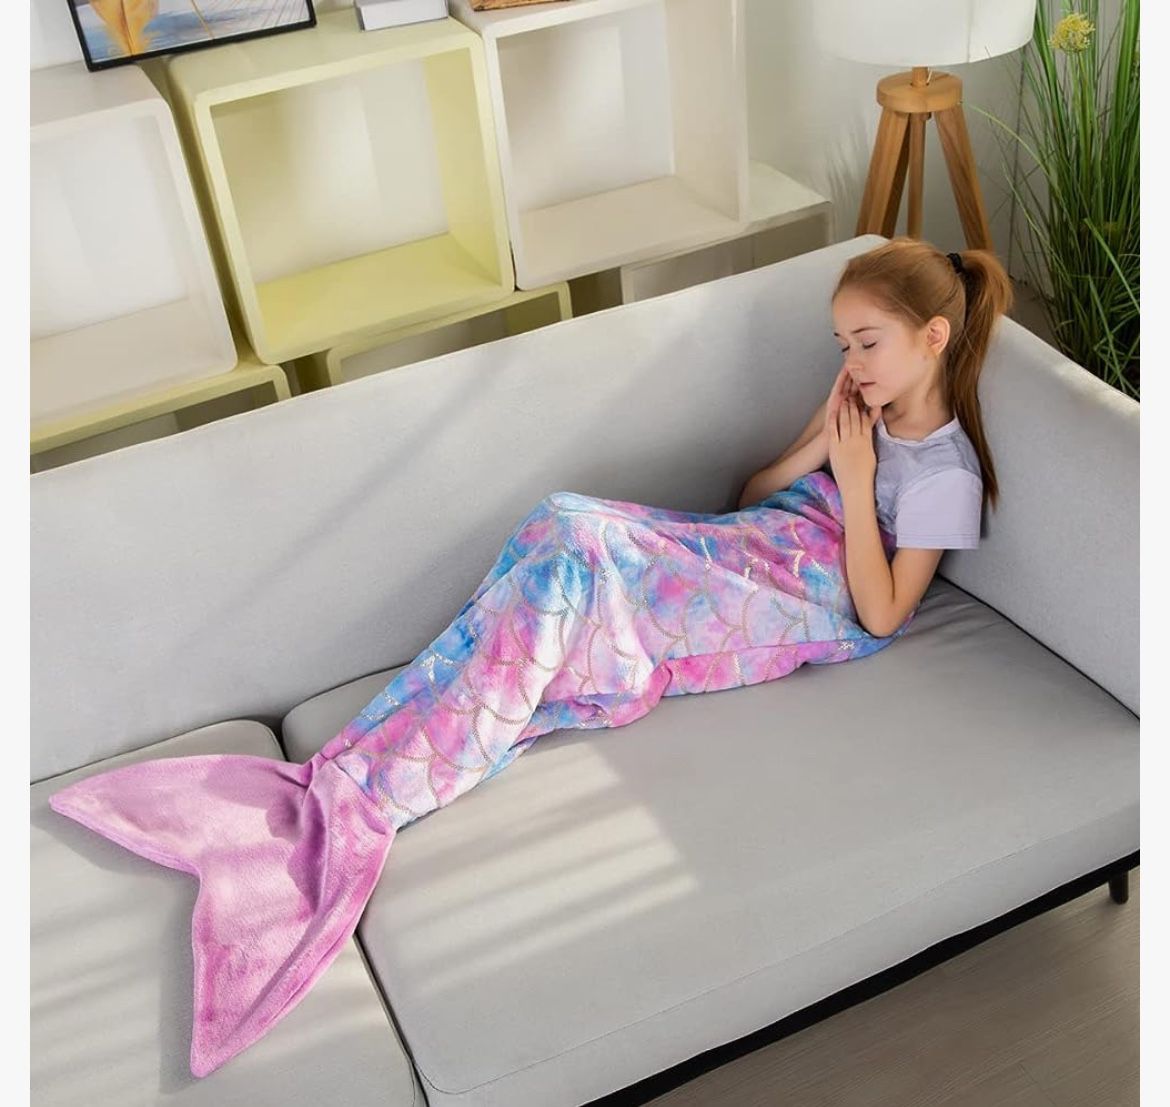 Mermaid Tail plush blanket